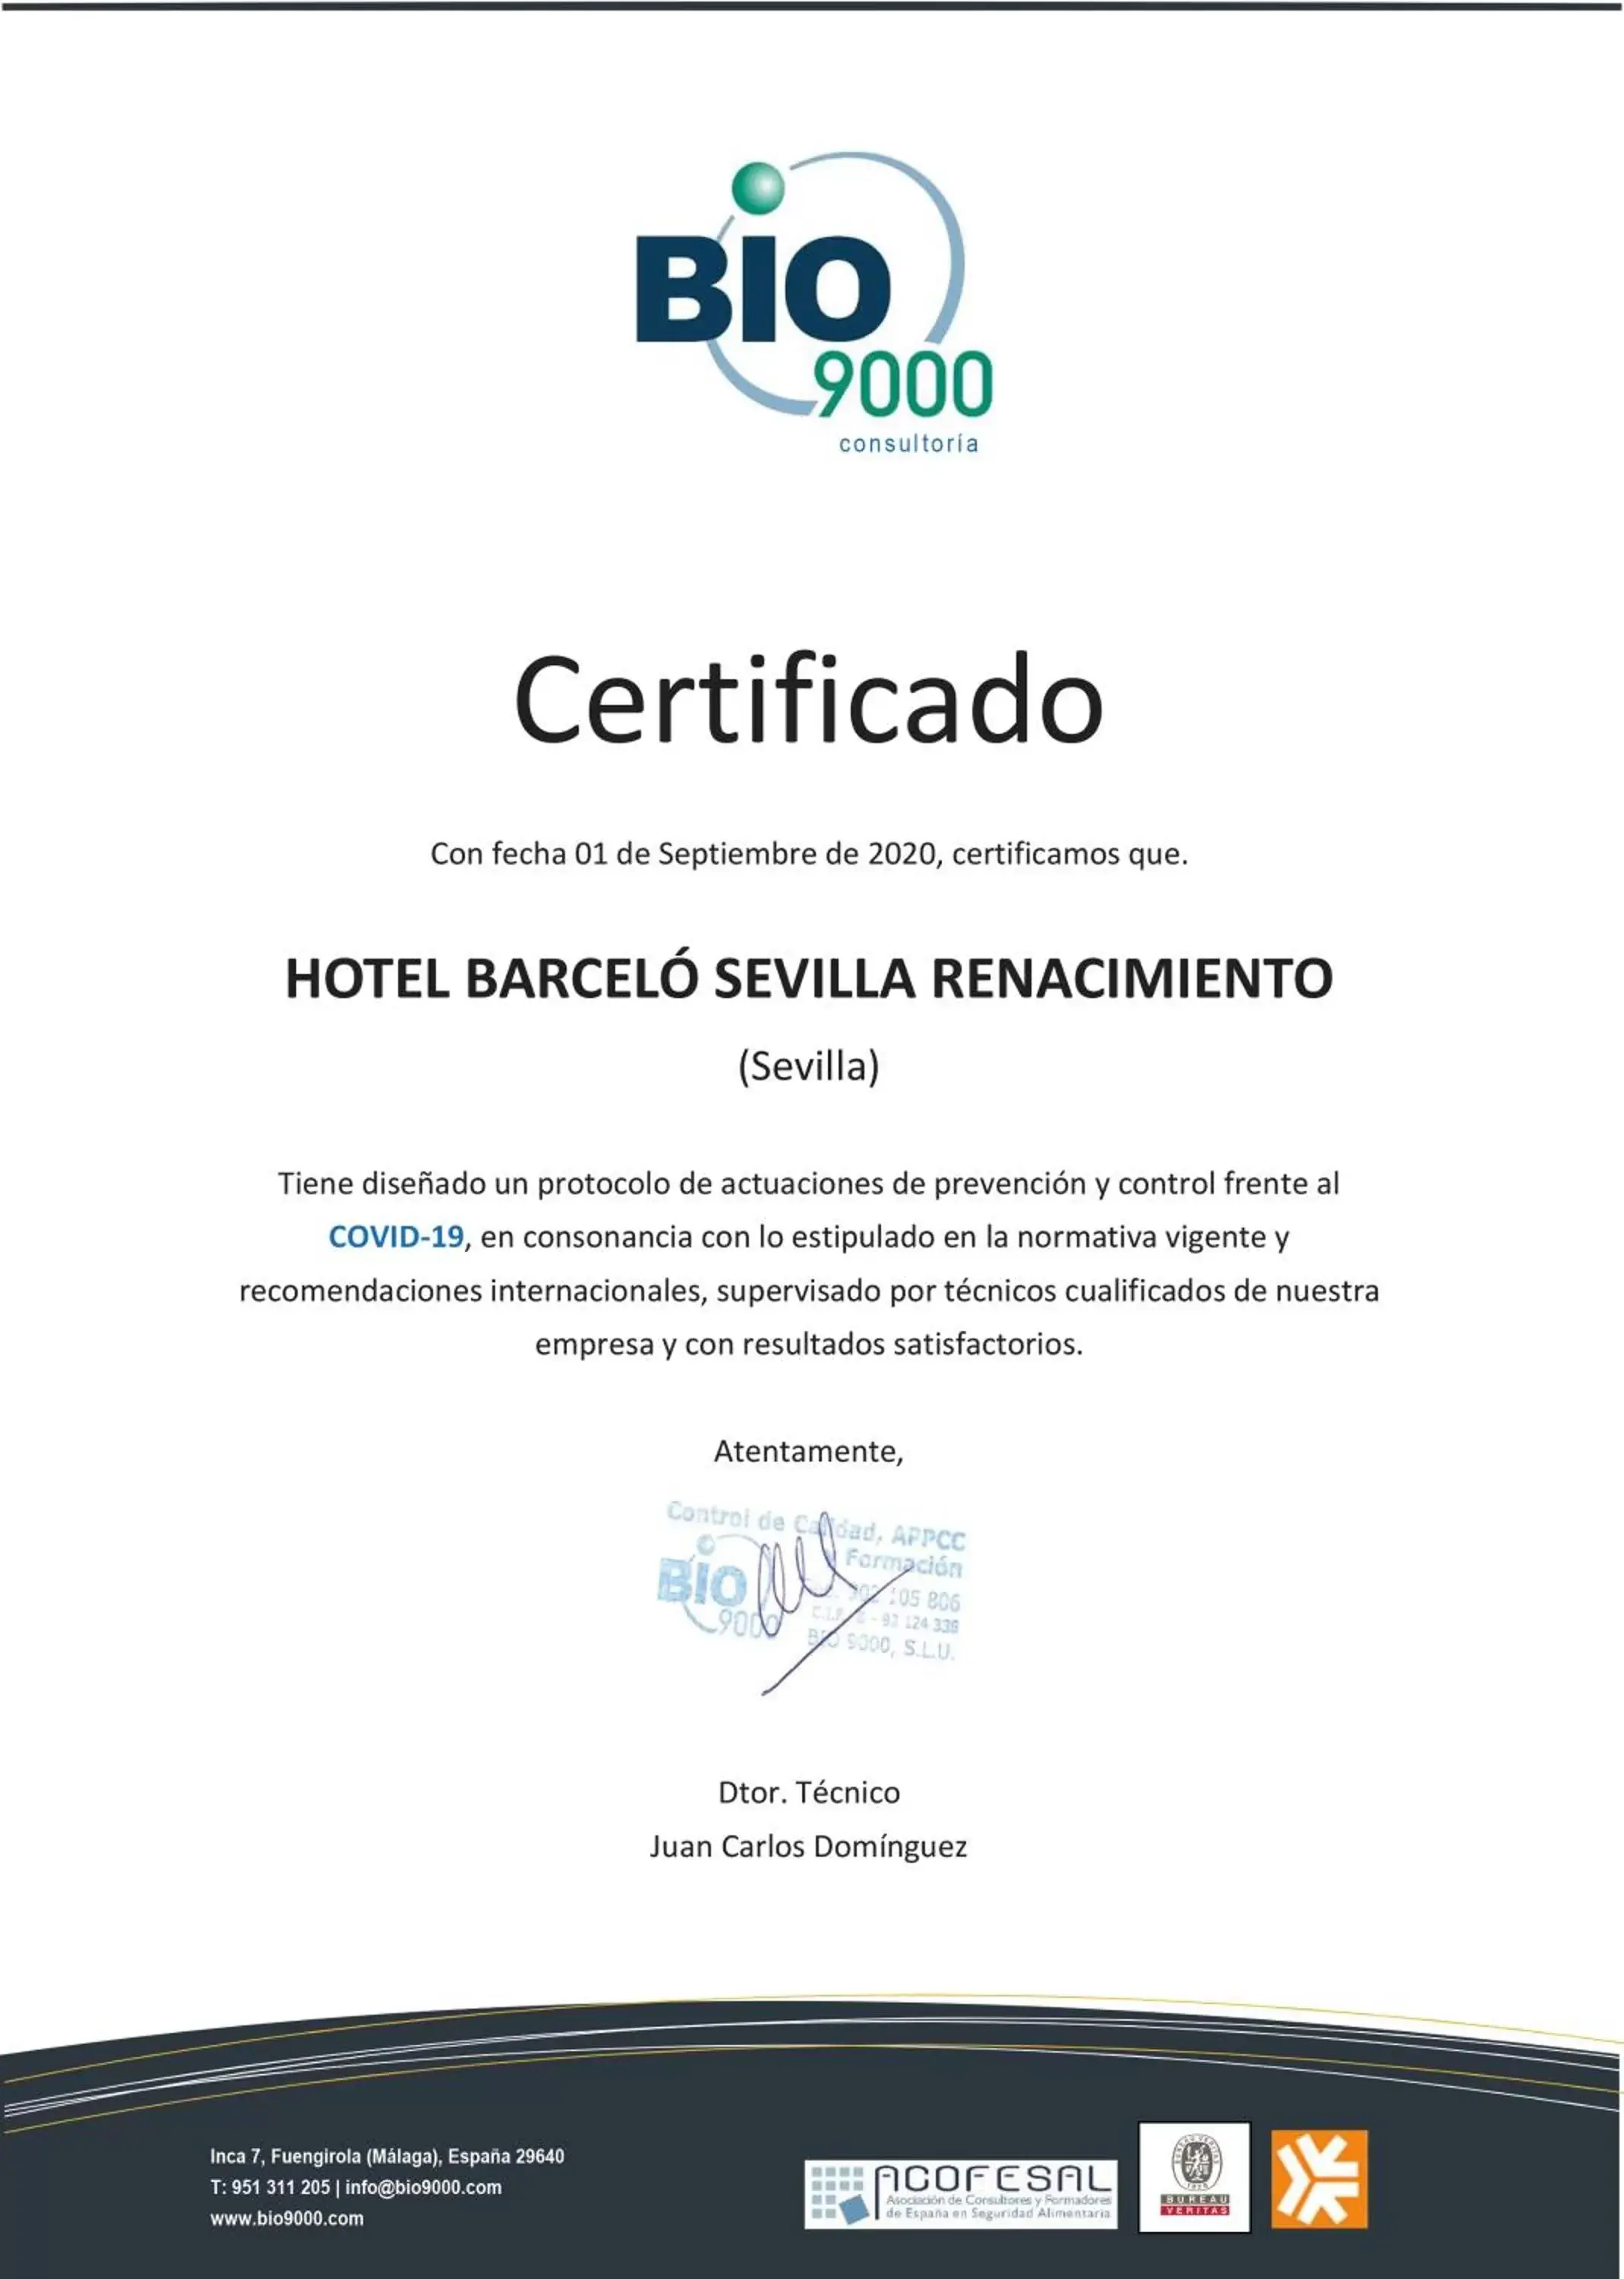 Certificate/Award in Barceló Sevilla Renacimiento